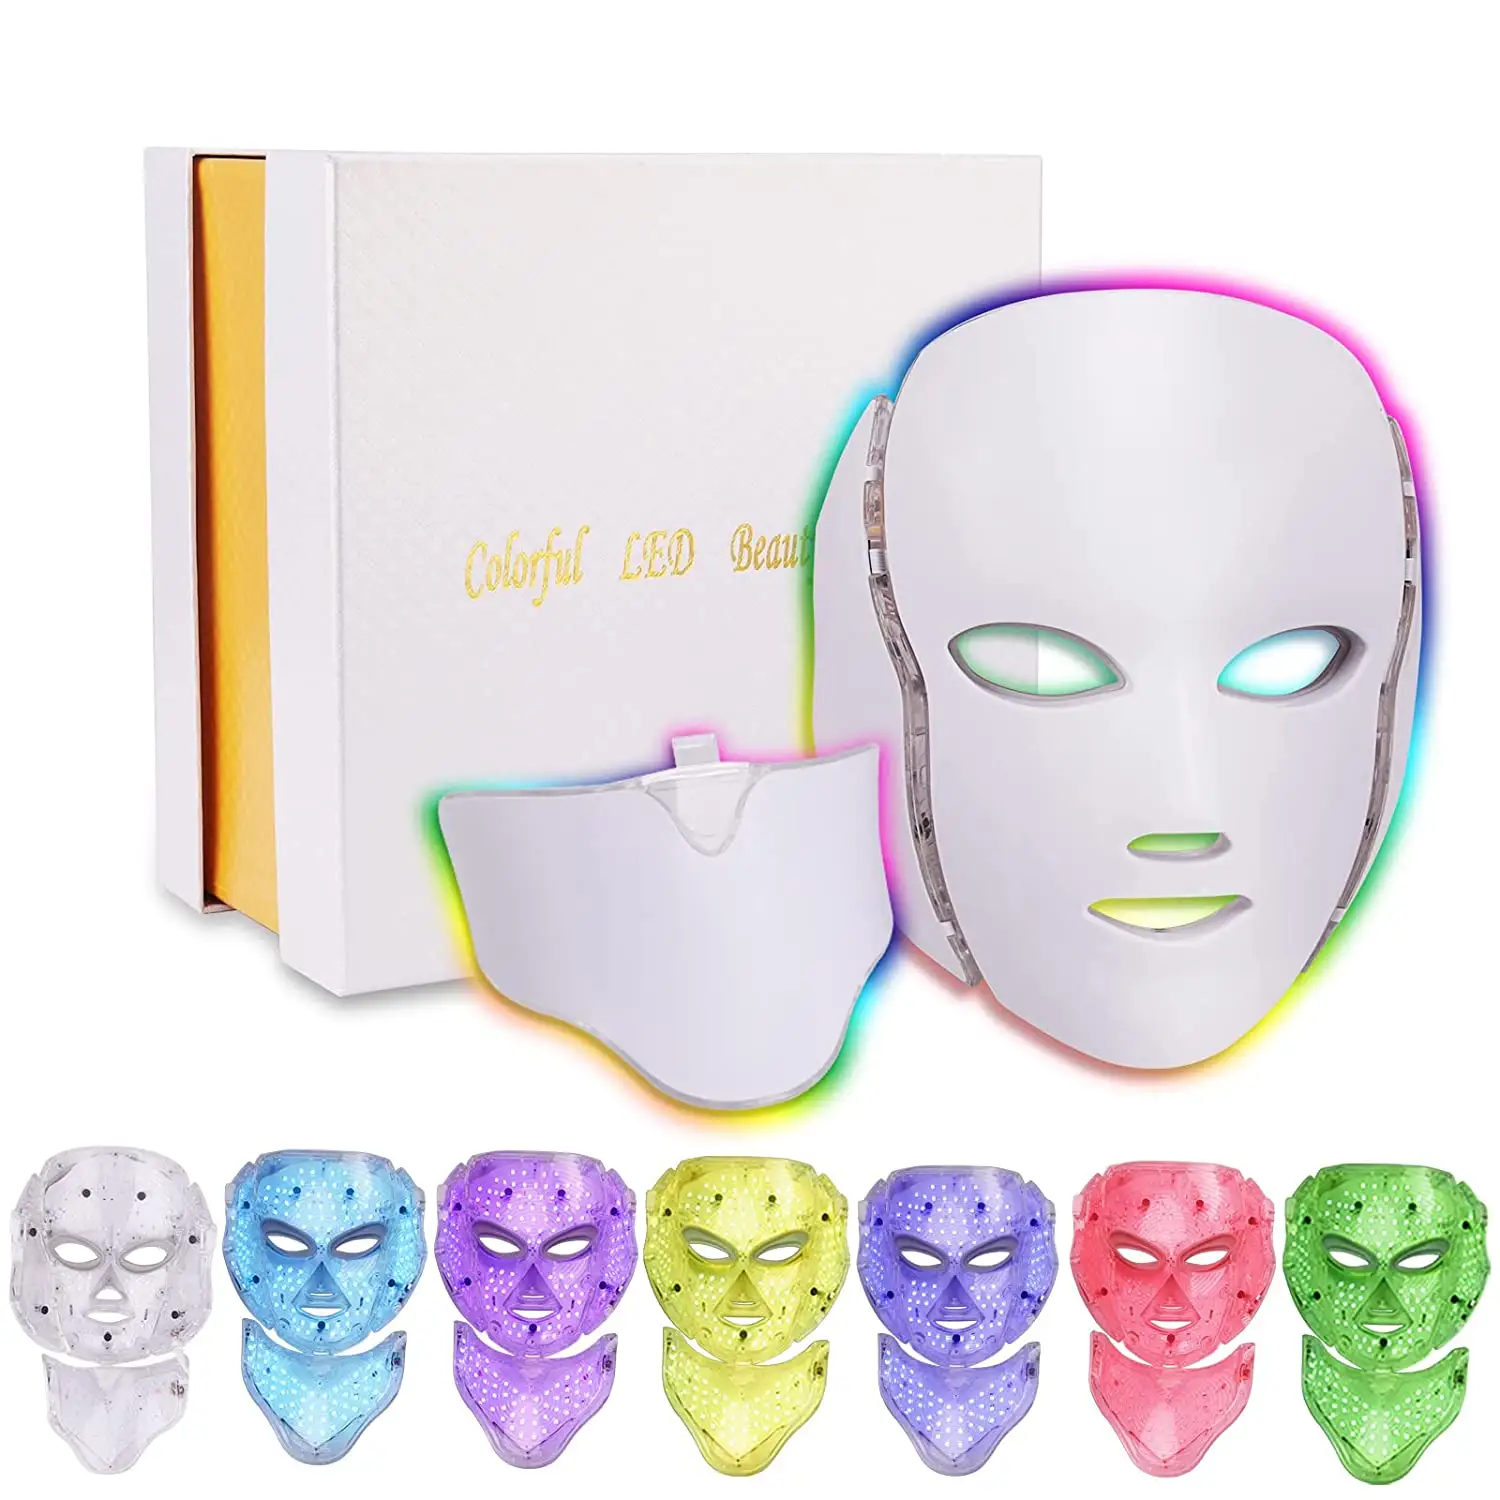 LED Gesichts maske Lichttherapie 7 Farbe Haut verjüngung therapie LED Photonen maske Licht Gesichts behandlung Anti-Aging Hauts traffung Falten